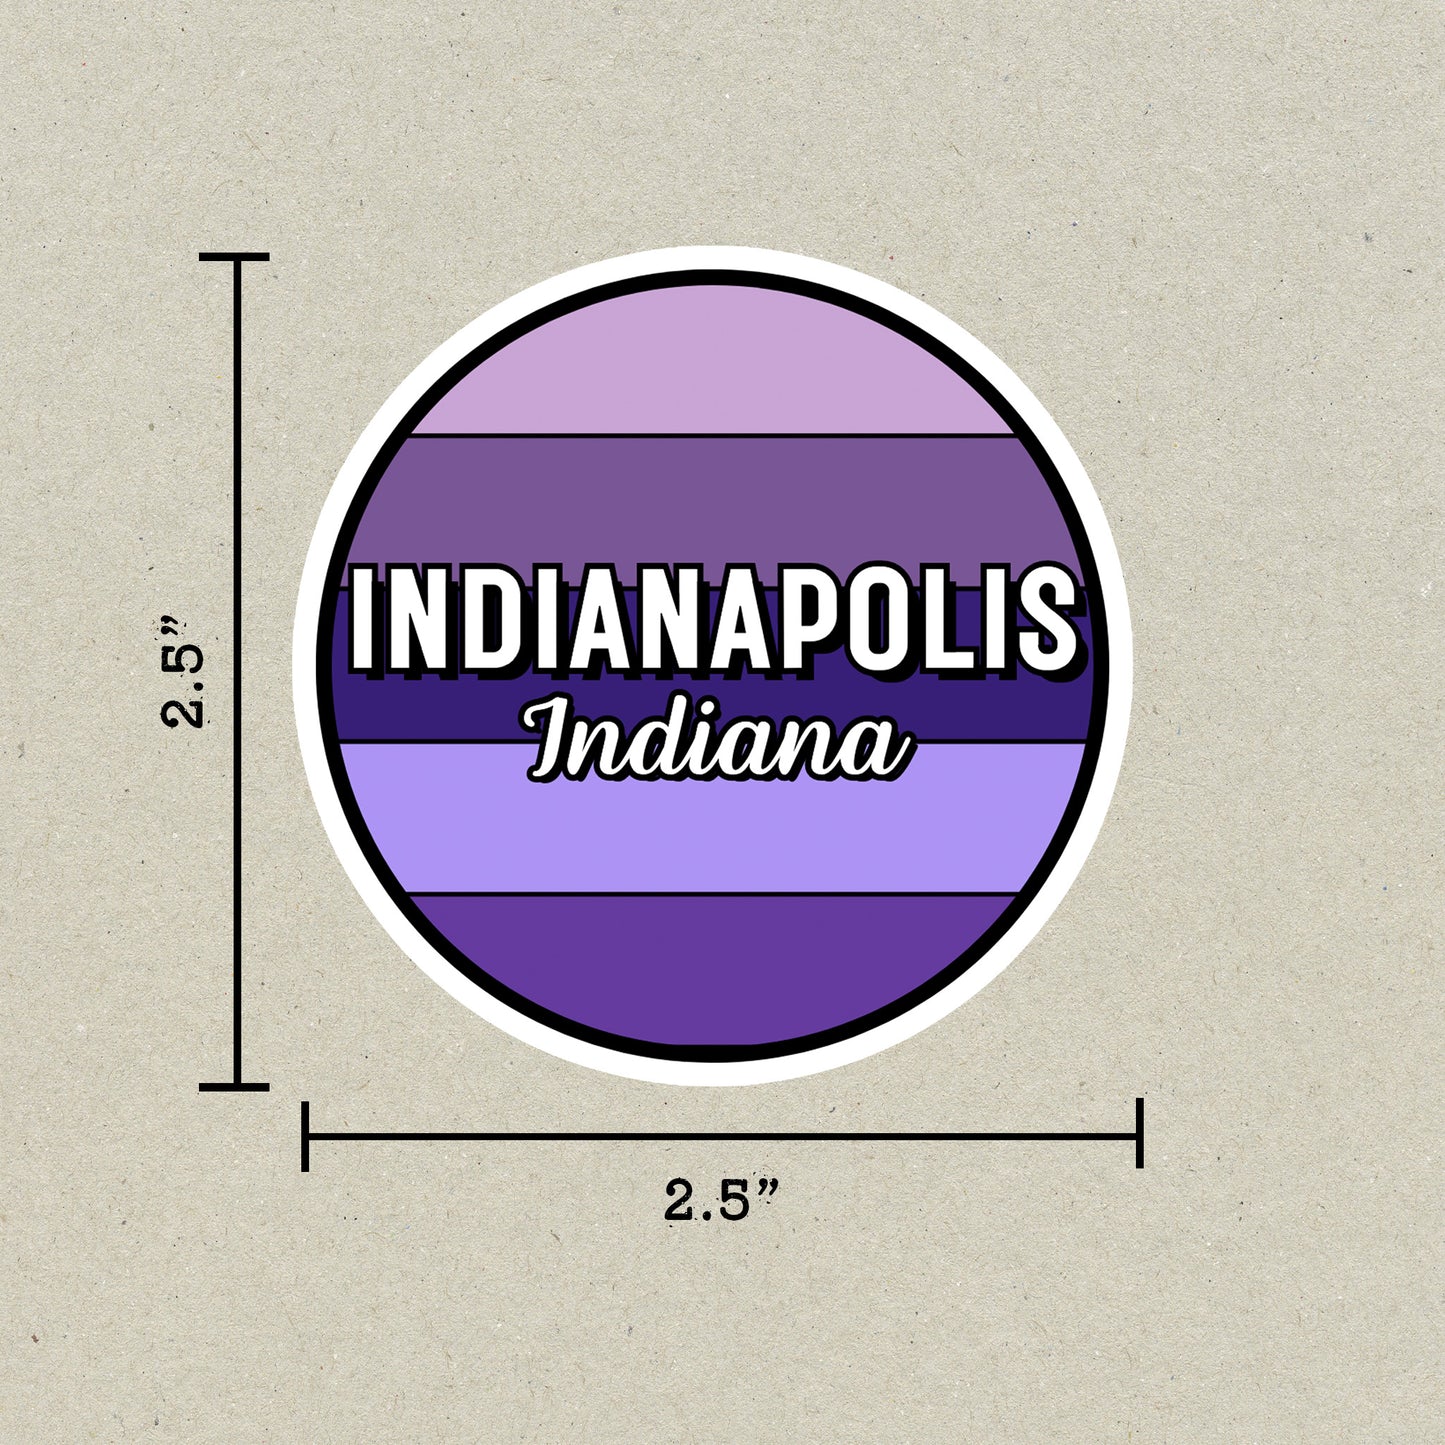 Indianapolis, Indiana Circle Sticker